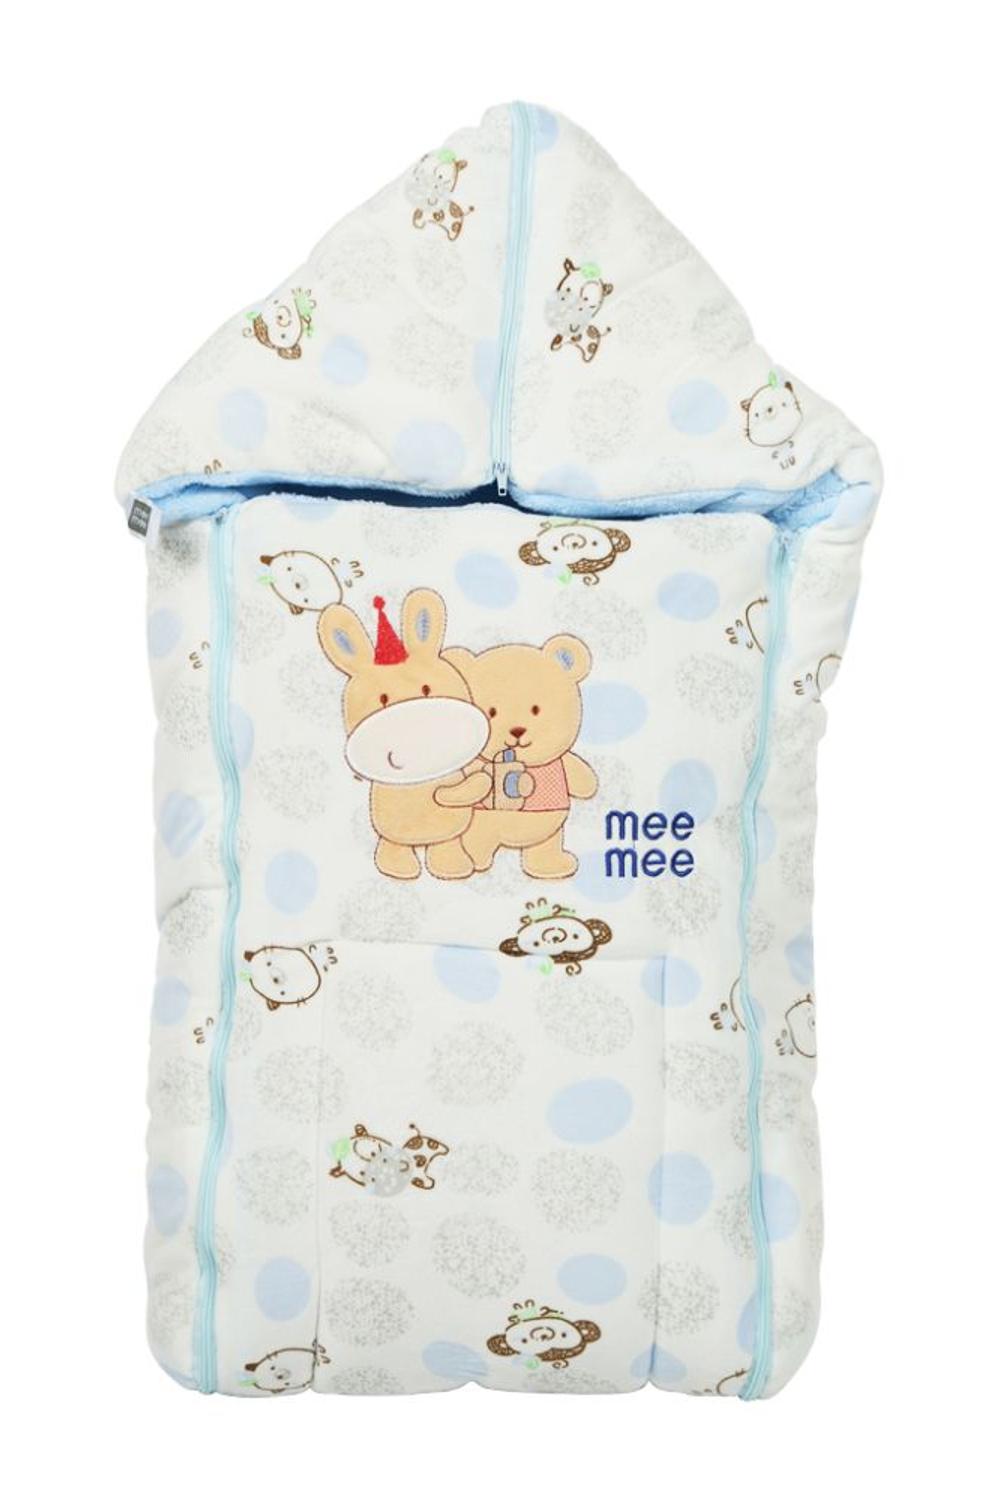 Mee Mee Baby Cozy Carry Nest Bag (Blue)